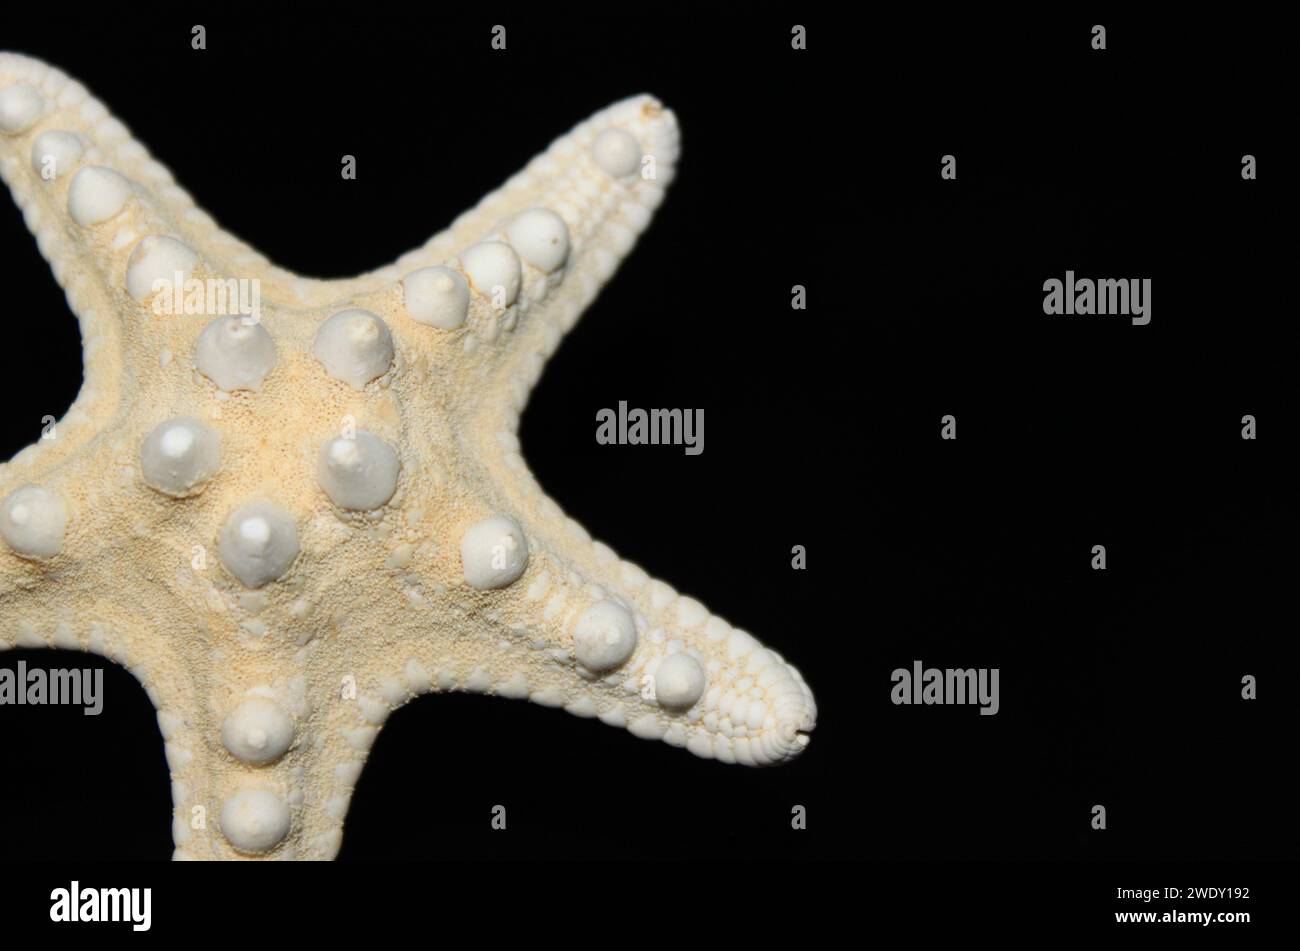 Sea starfish on a black background Stock Photo